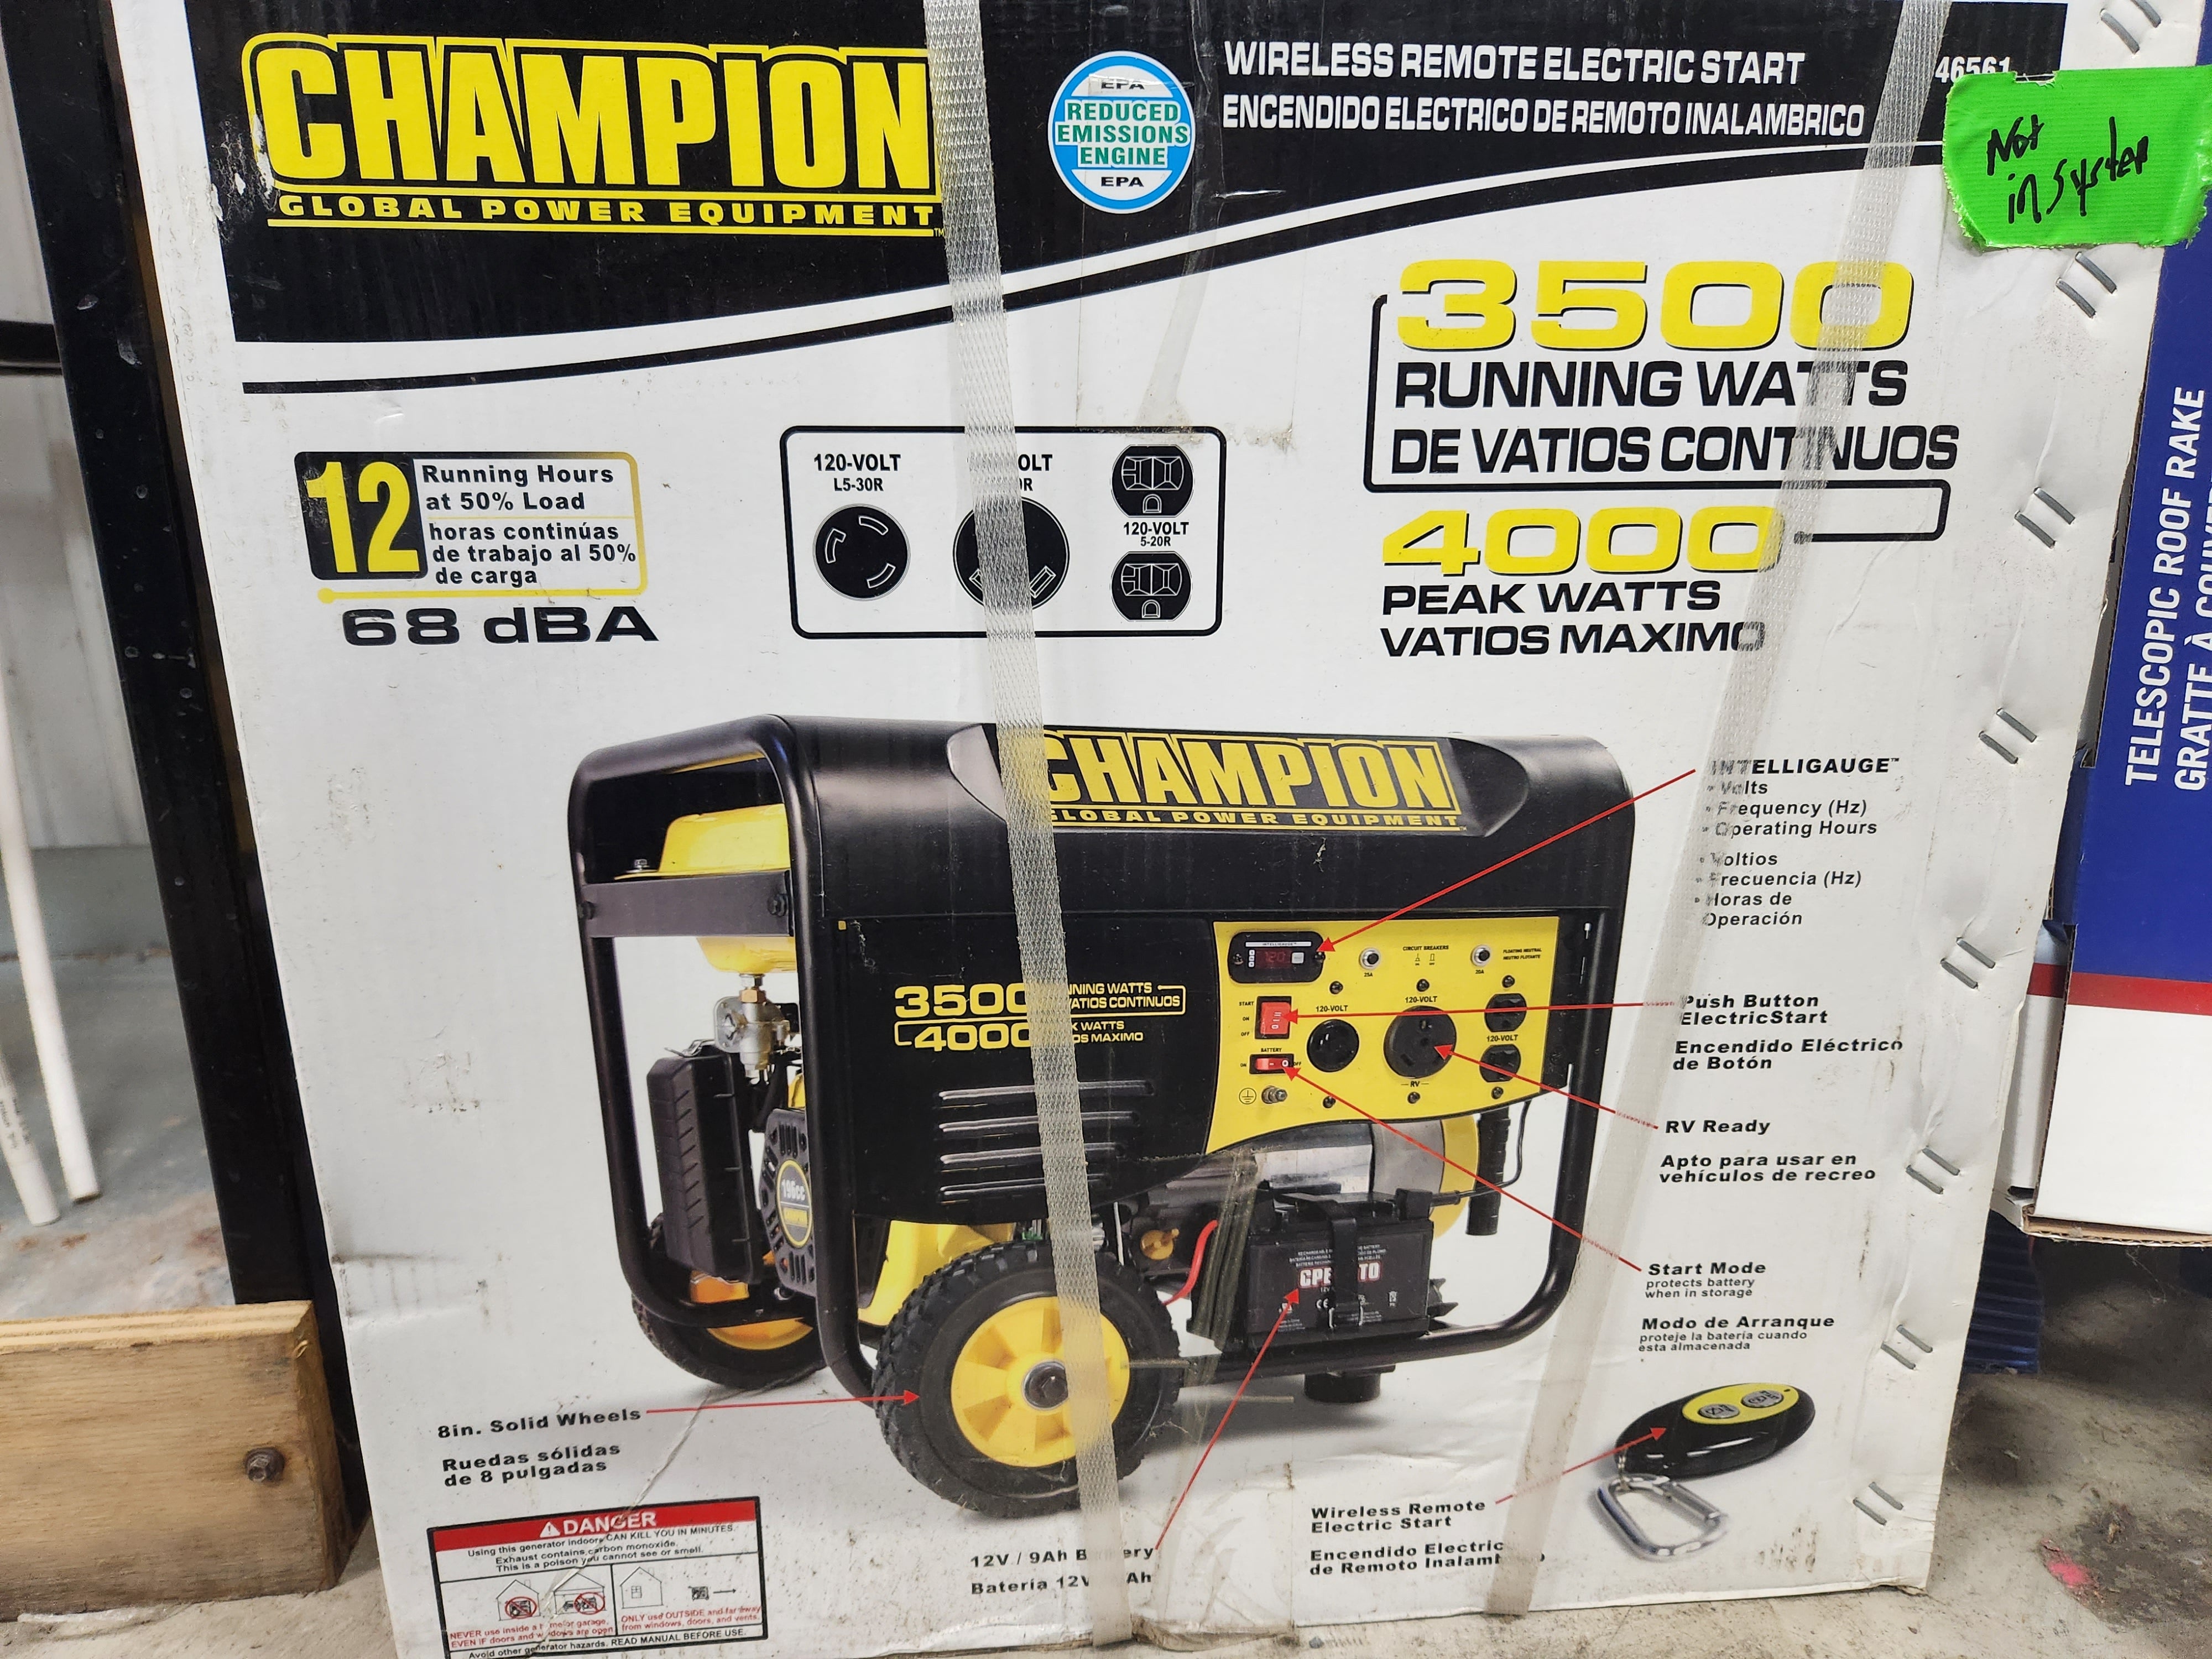 Champion Generator 68 dBA Wireless Remote Electric Start #46561